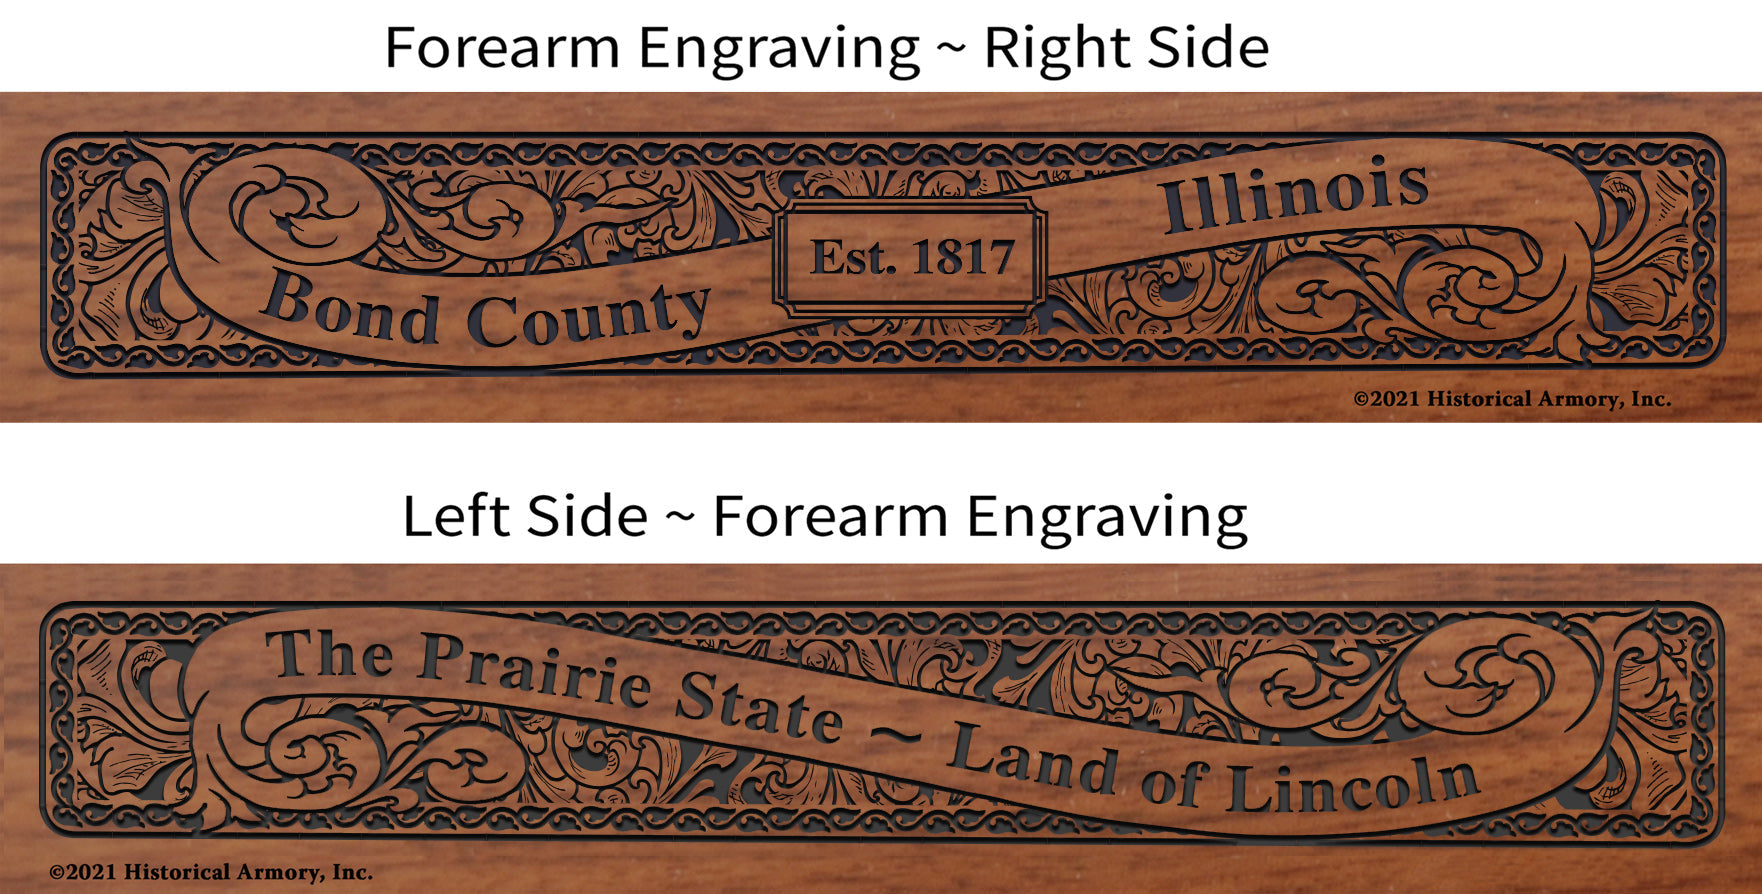 Bond County Illinois Establishment and Motto History Engraved Rifle Forearm